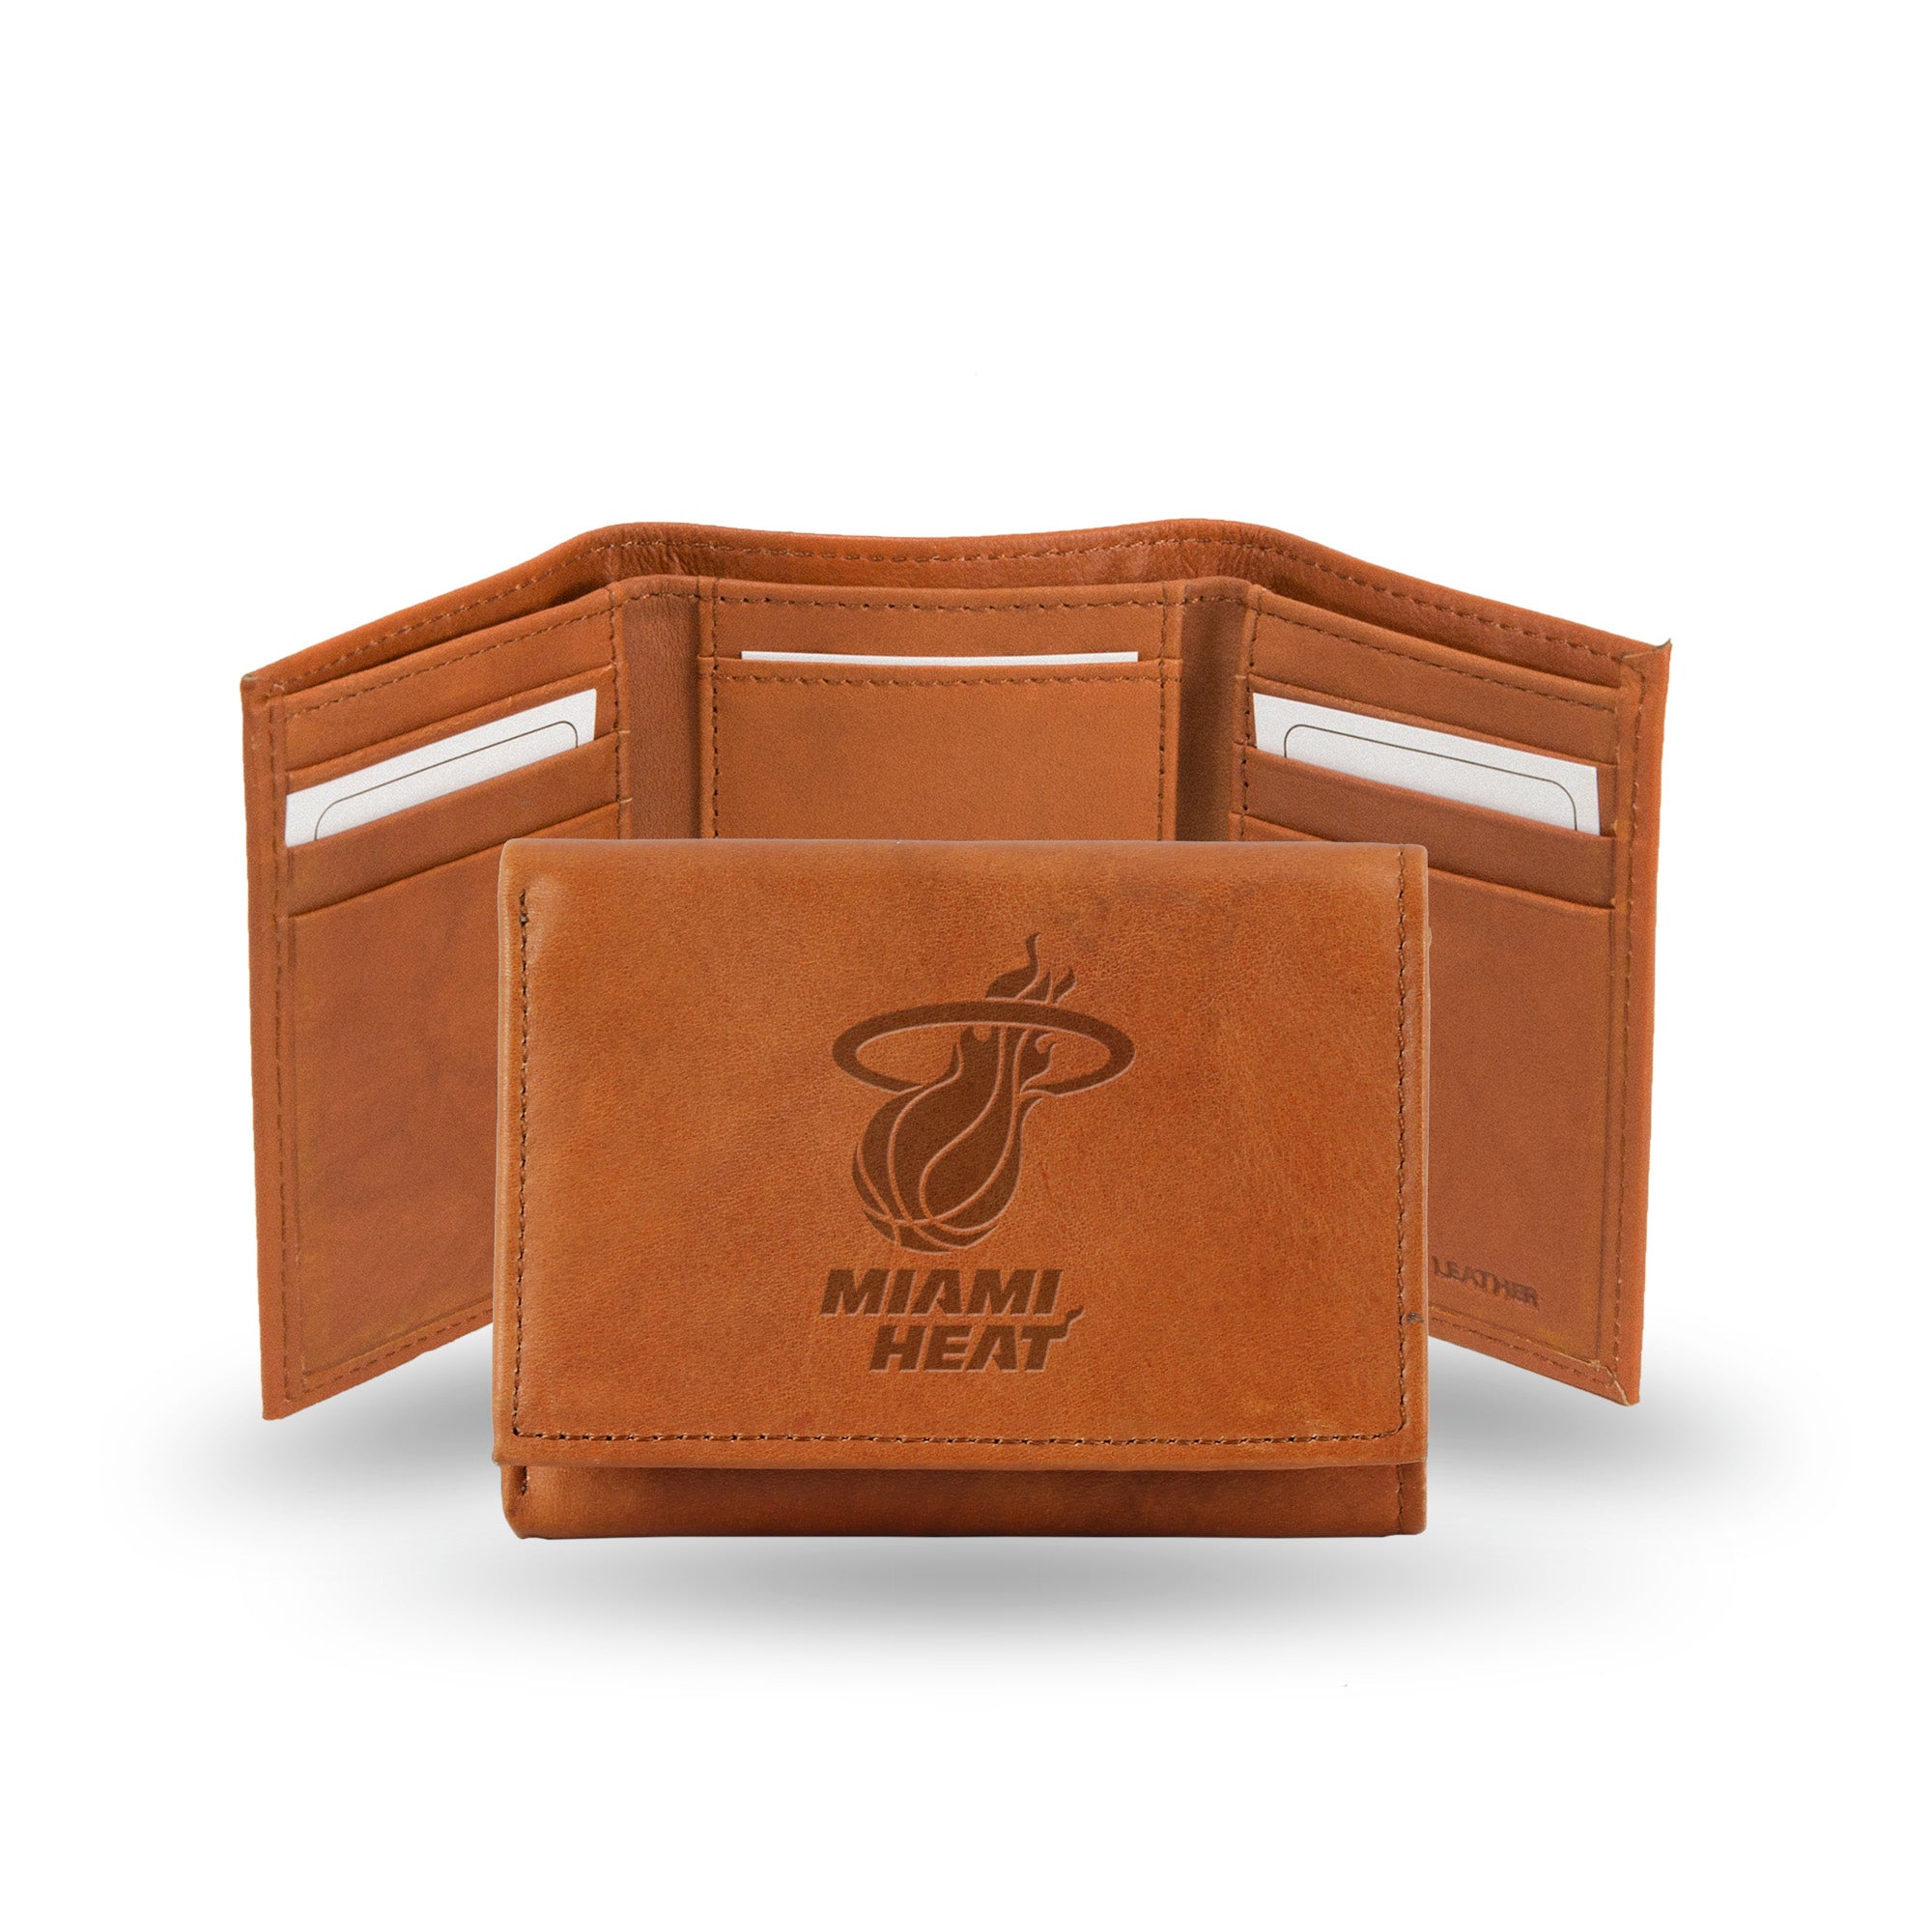 Miami Heat Genuine Leather Pecan Tri-Fold Wallet